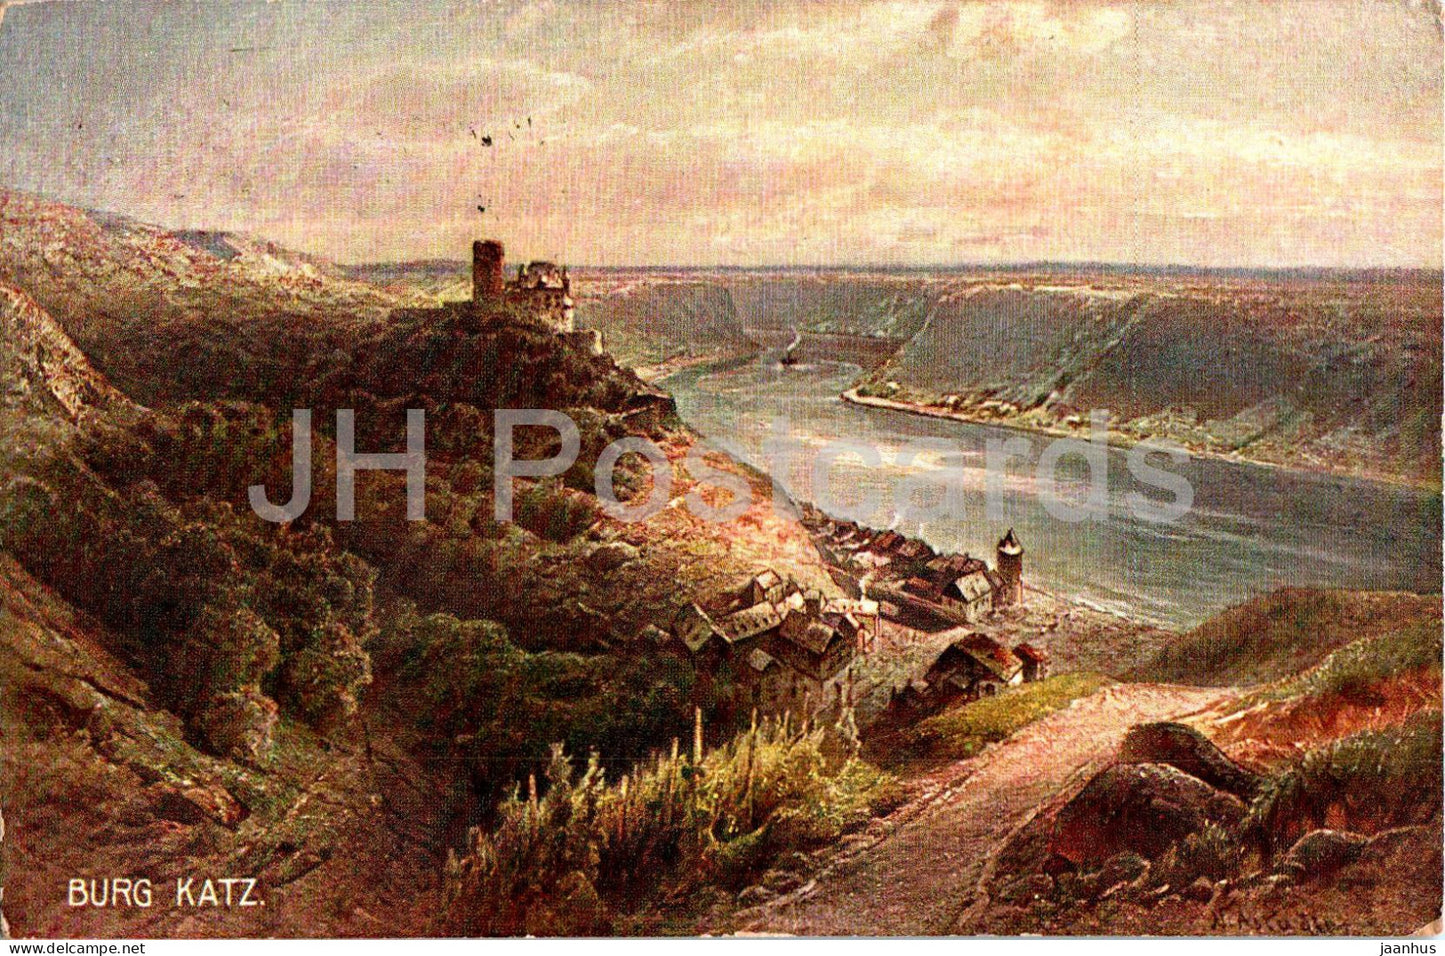 Burg Katz - castle - 92 - illustration - old postcard - 1932 - Germany - used - JH Postcards